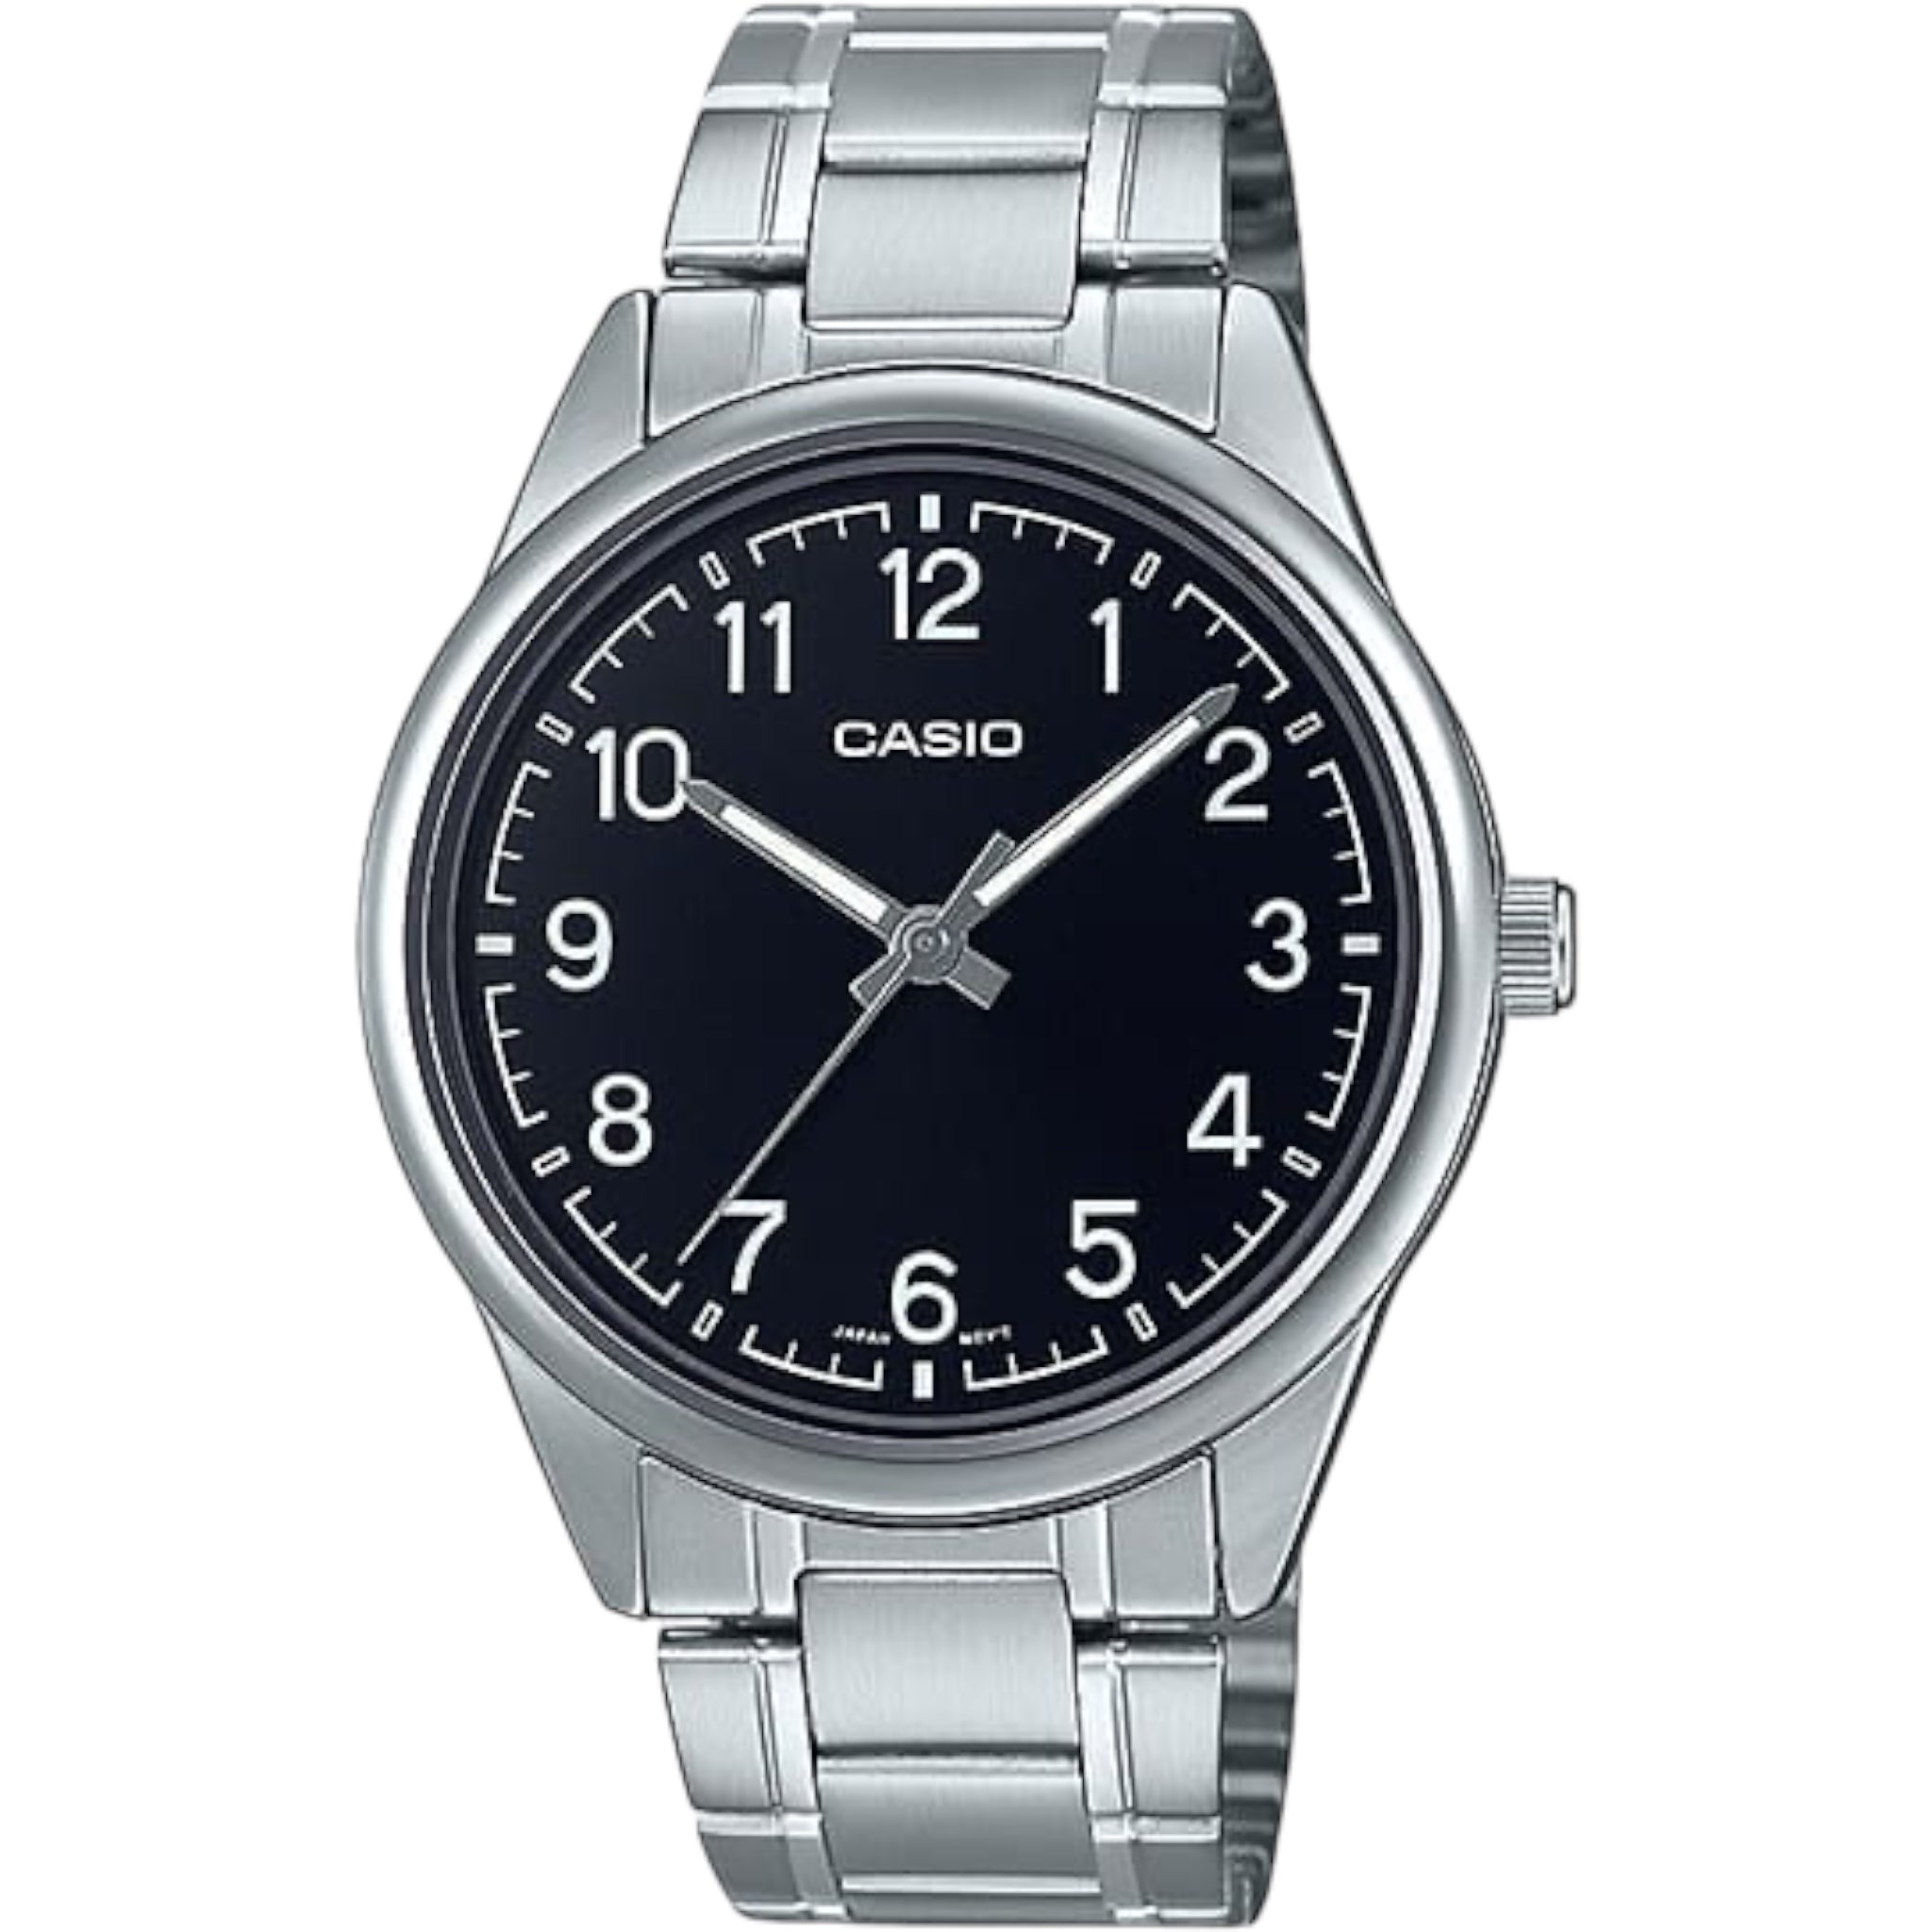 Casio Men's Watch MTP-V005D-1B4